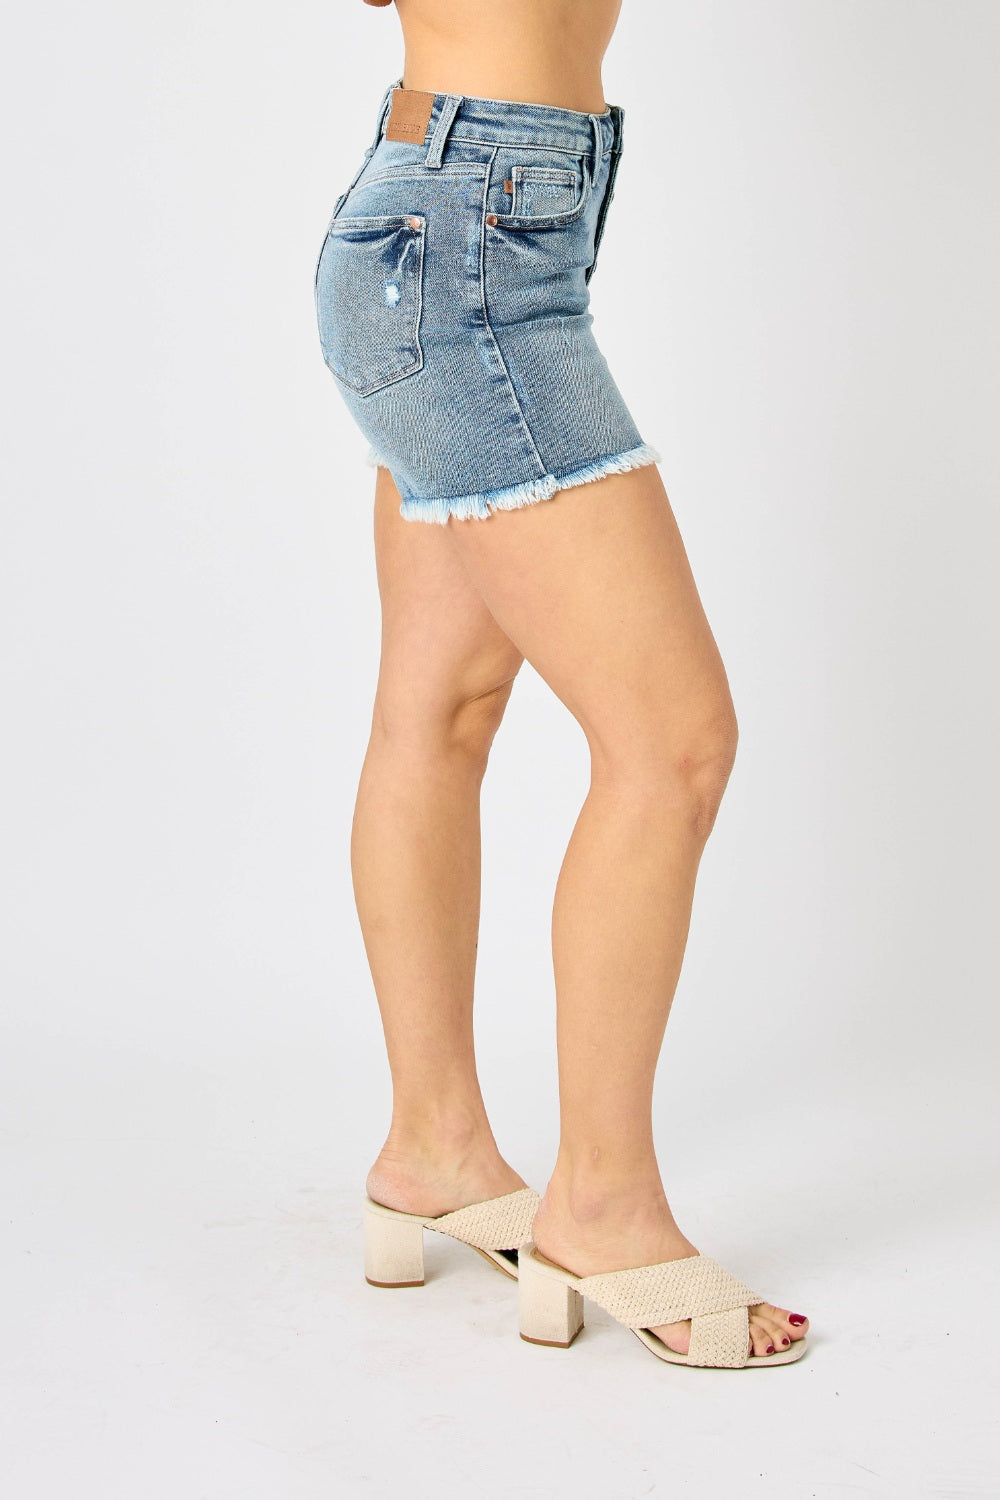 Judy Blue Full Size Button Fly Raw Hem Denim Shorts shorts